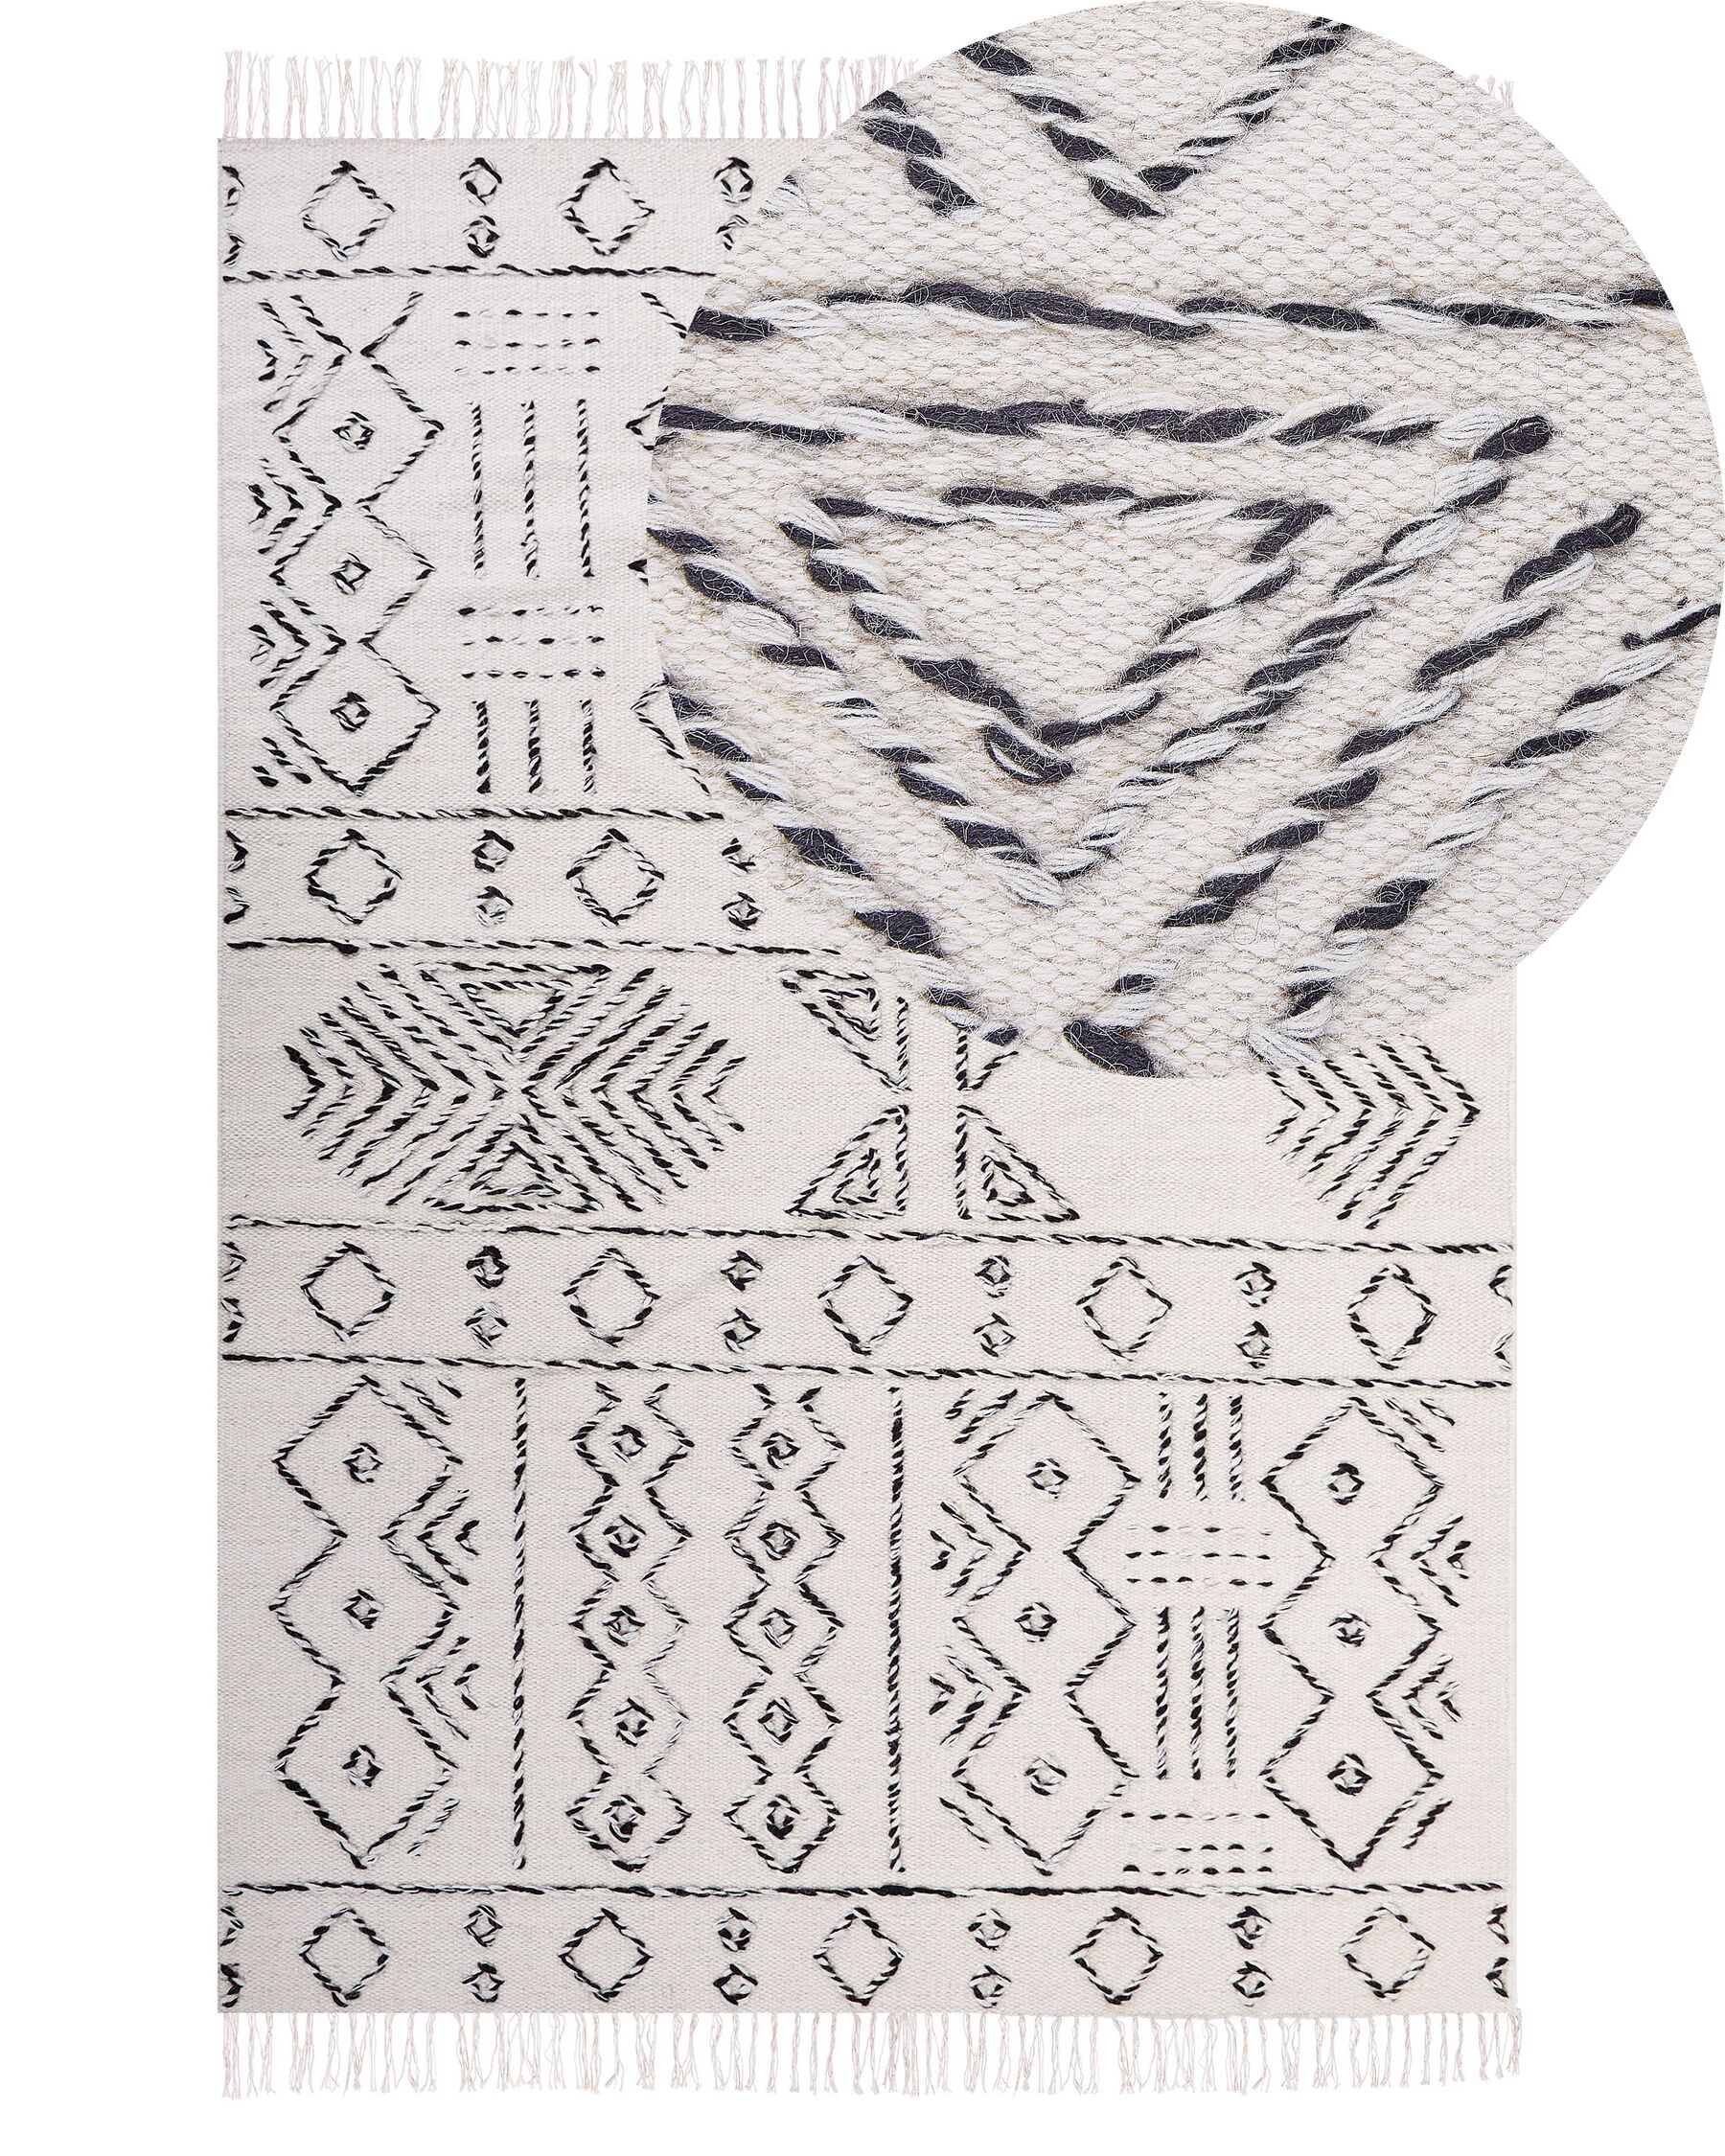 Tappeto lana e cotone bianco e nero 140 x 200 cm ALKENT_852497